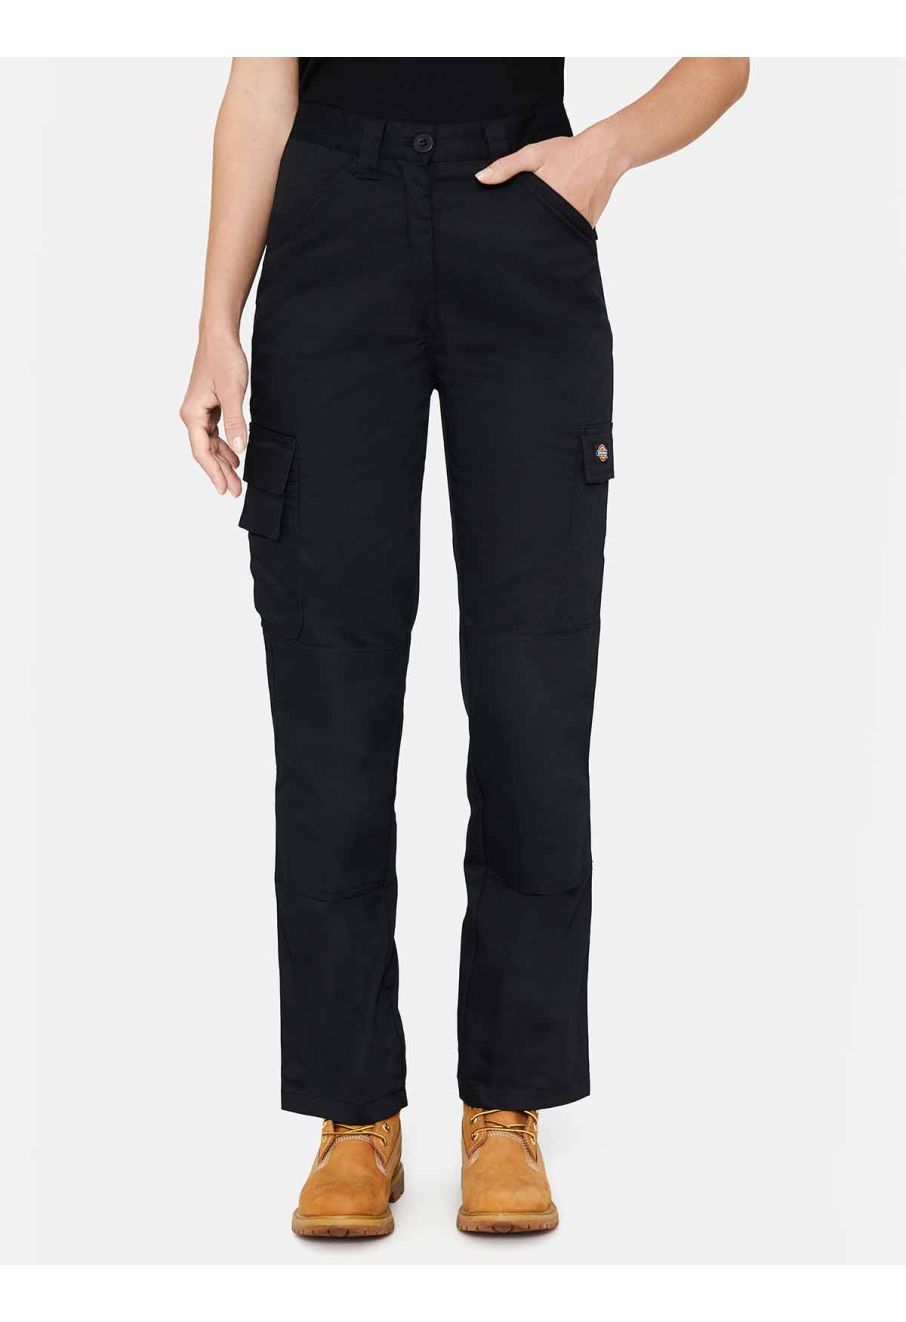  Dickies Women's Everyday Flex Cargo Pants, Black, 16